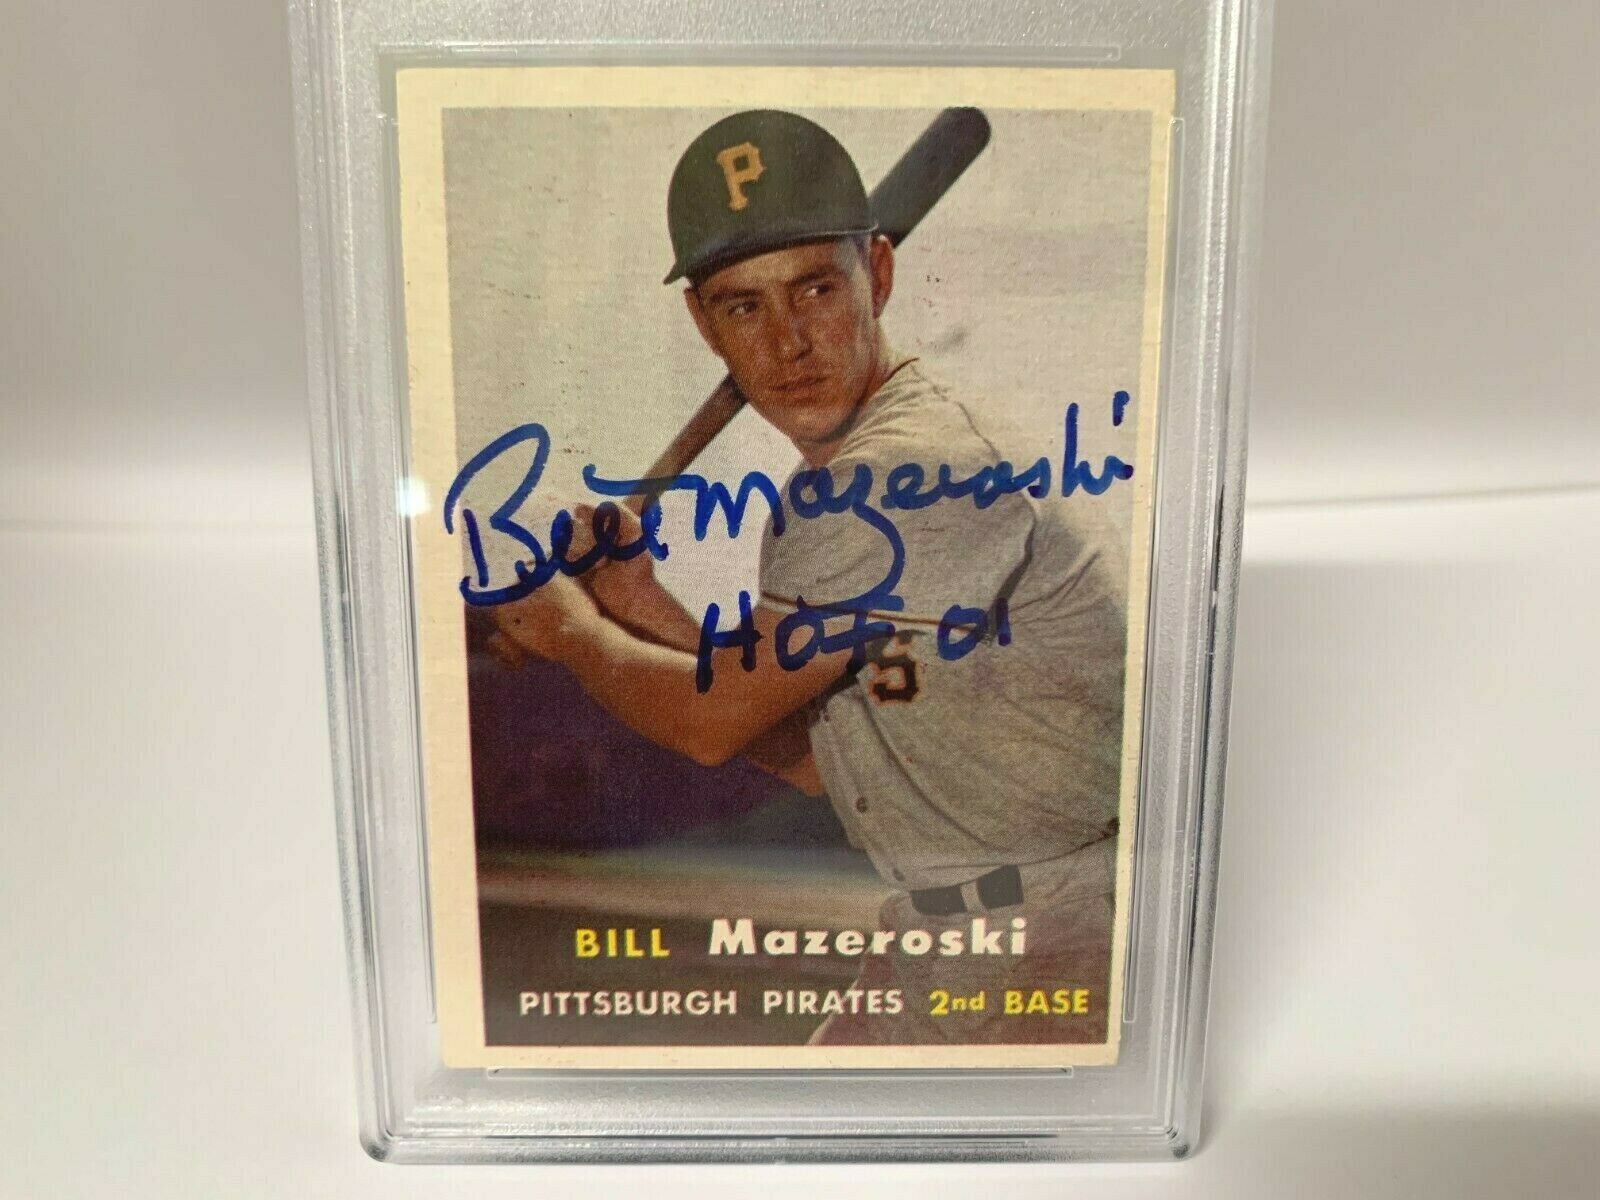 1957 Topps Bill Mazeroski Autographed Rookie Card PSA